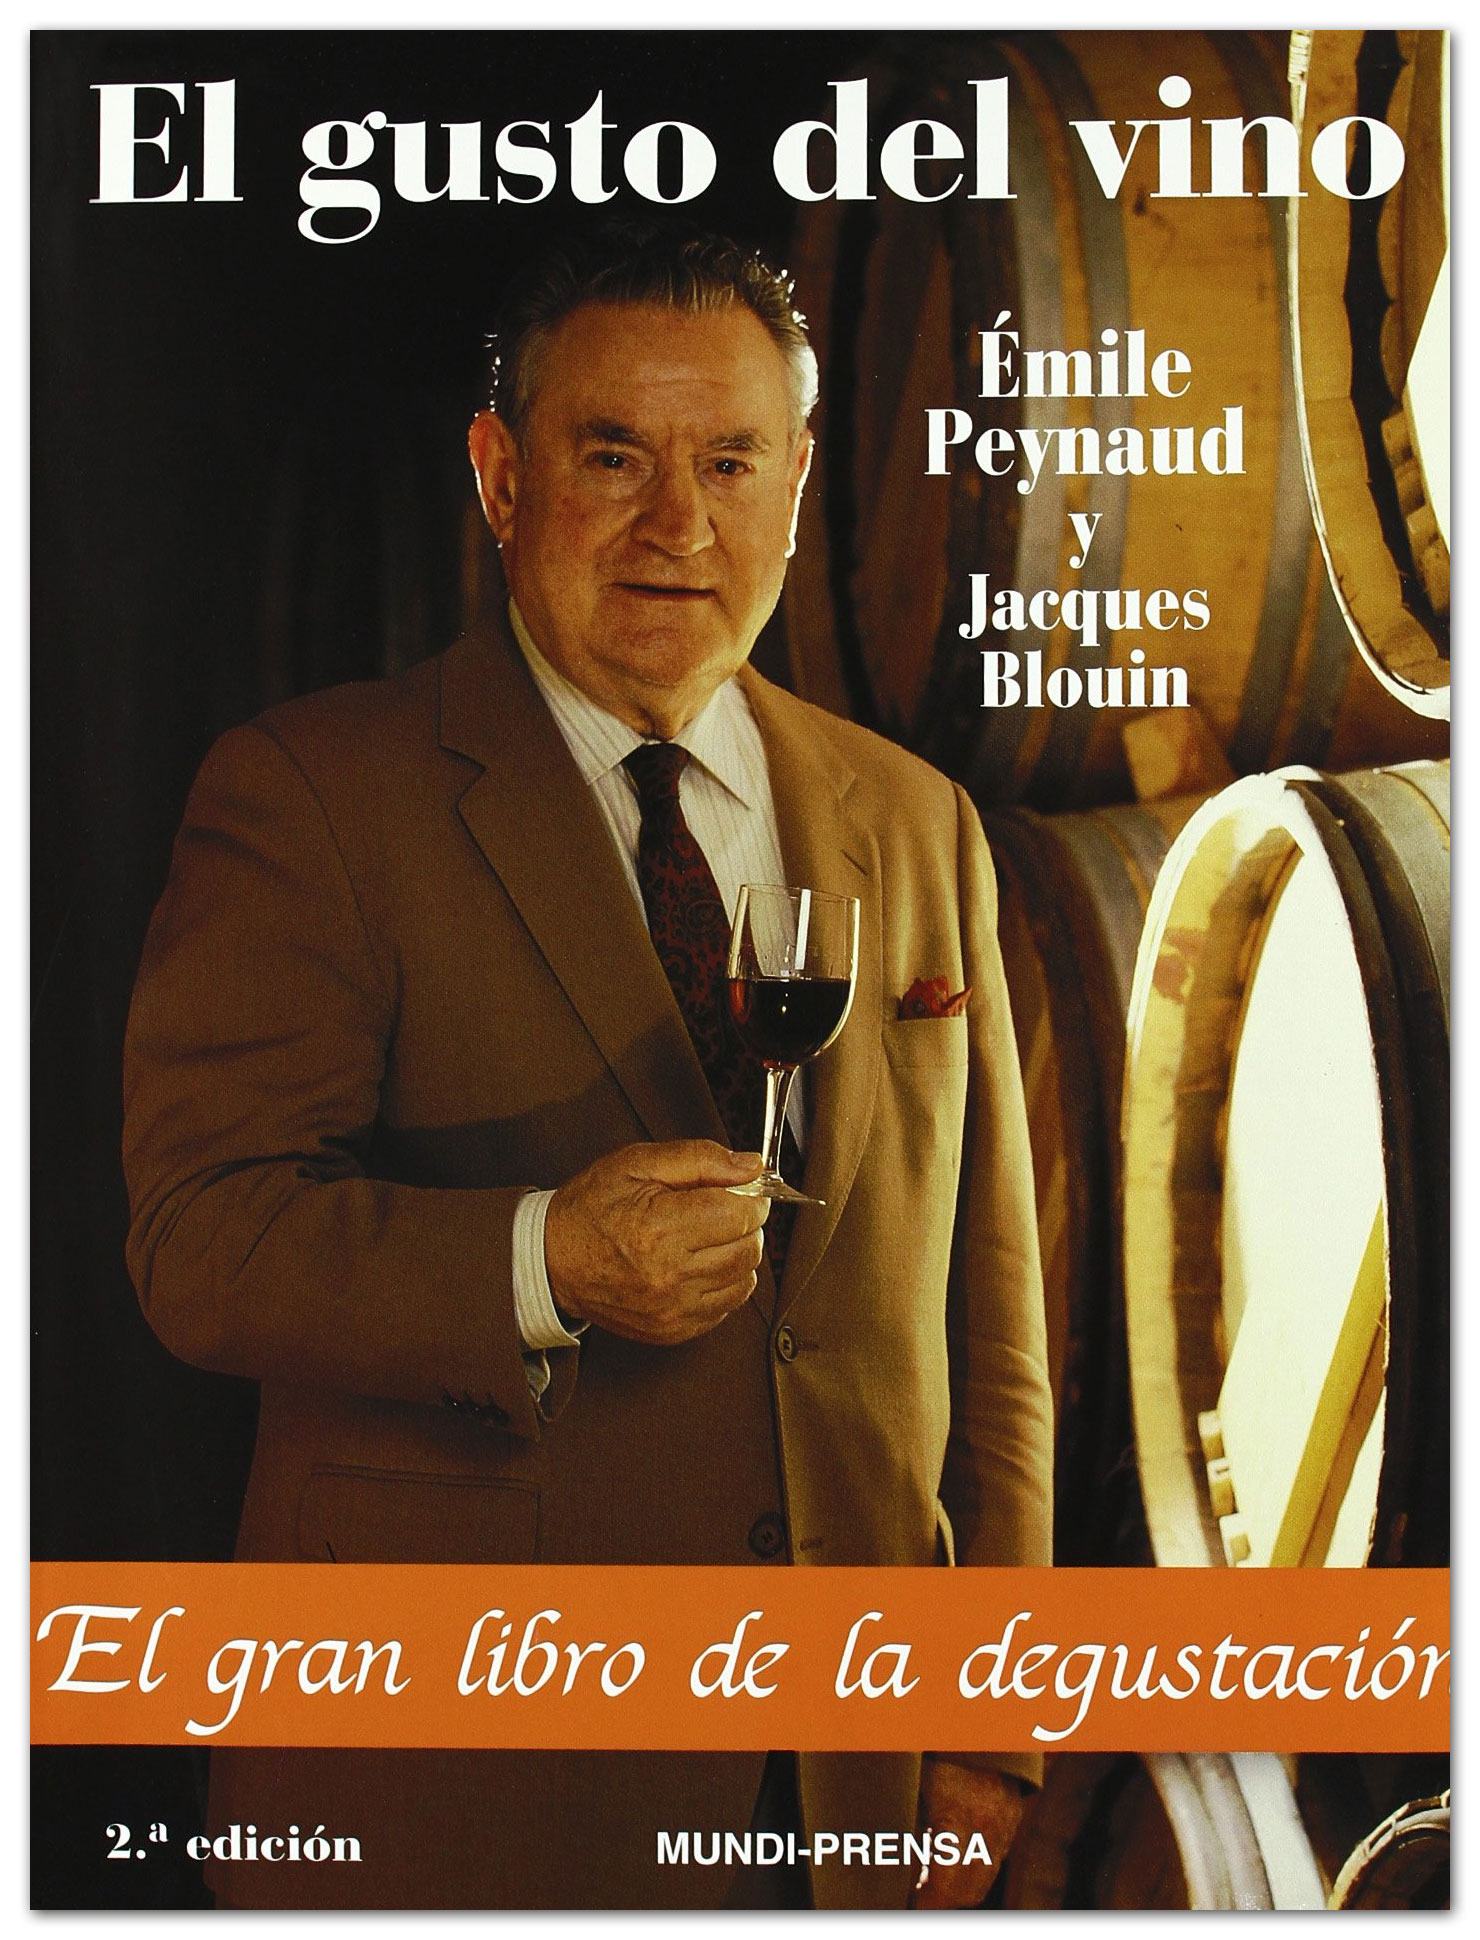 El gusto del vino - Emile Peynaud / Jacques Blouin